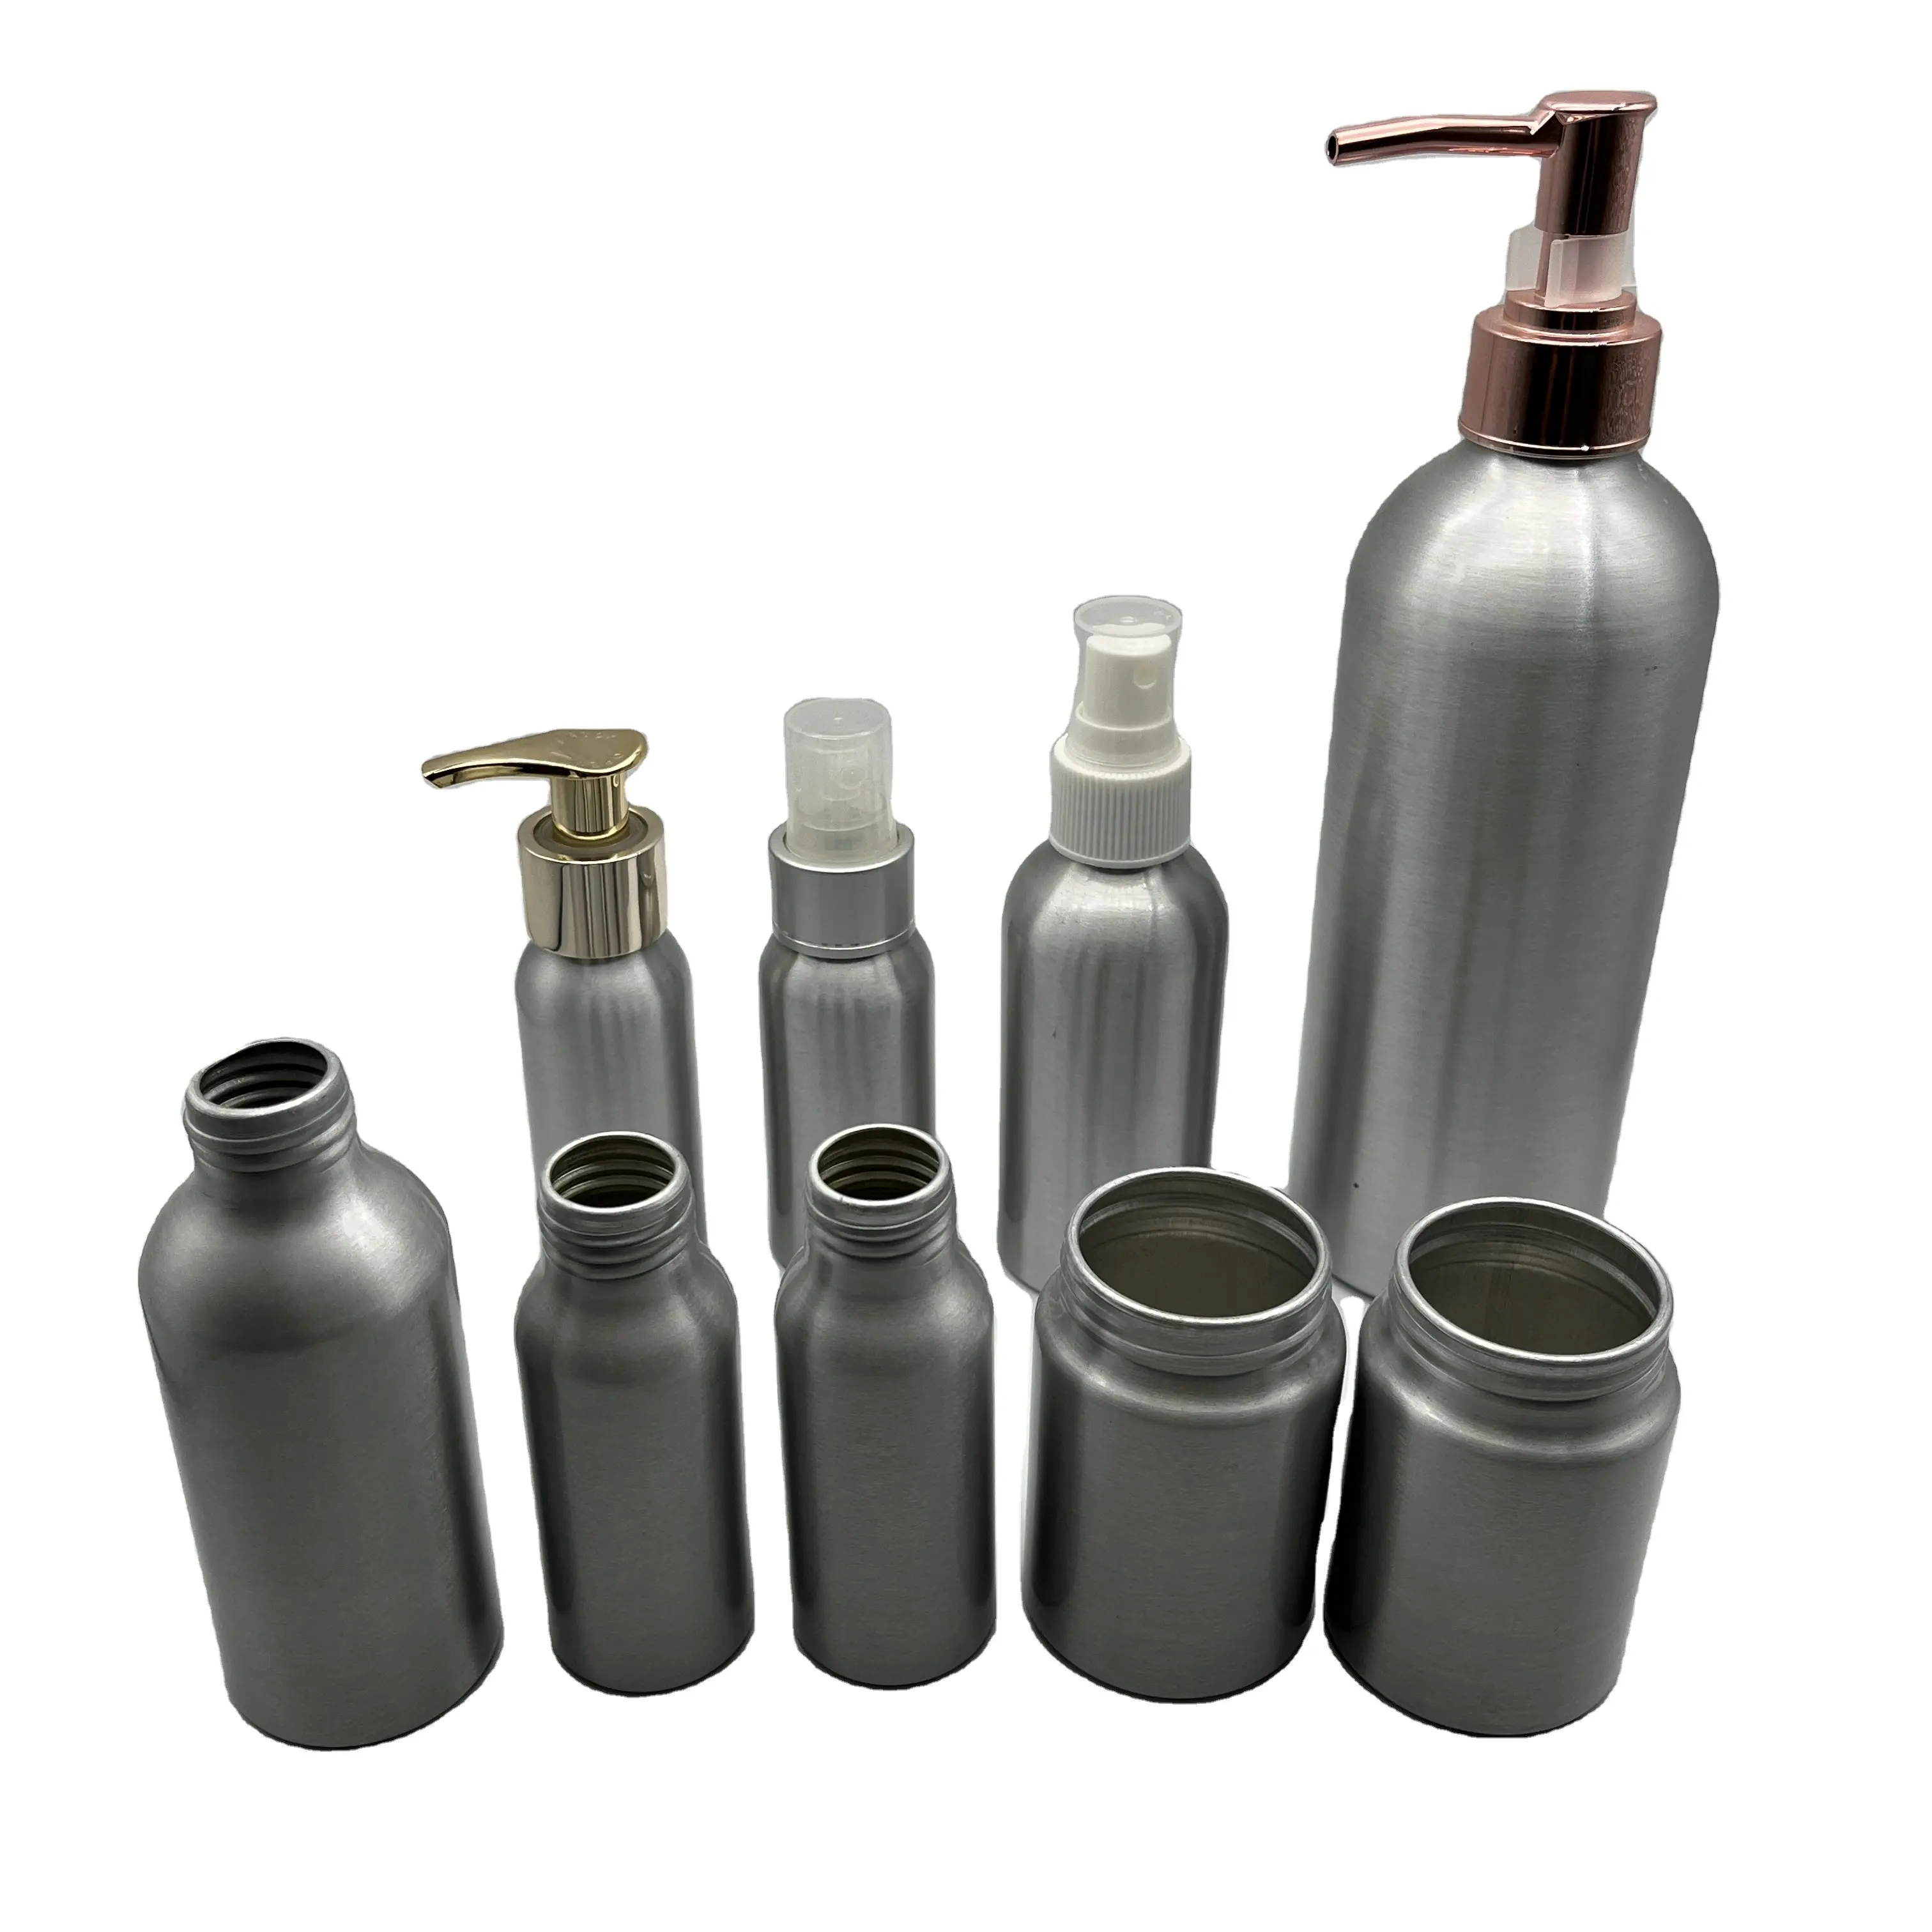 Gran oferta de alta calidad, botella de aluminio de 1 litro con tapa pulverizadora